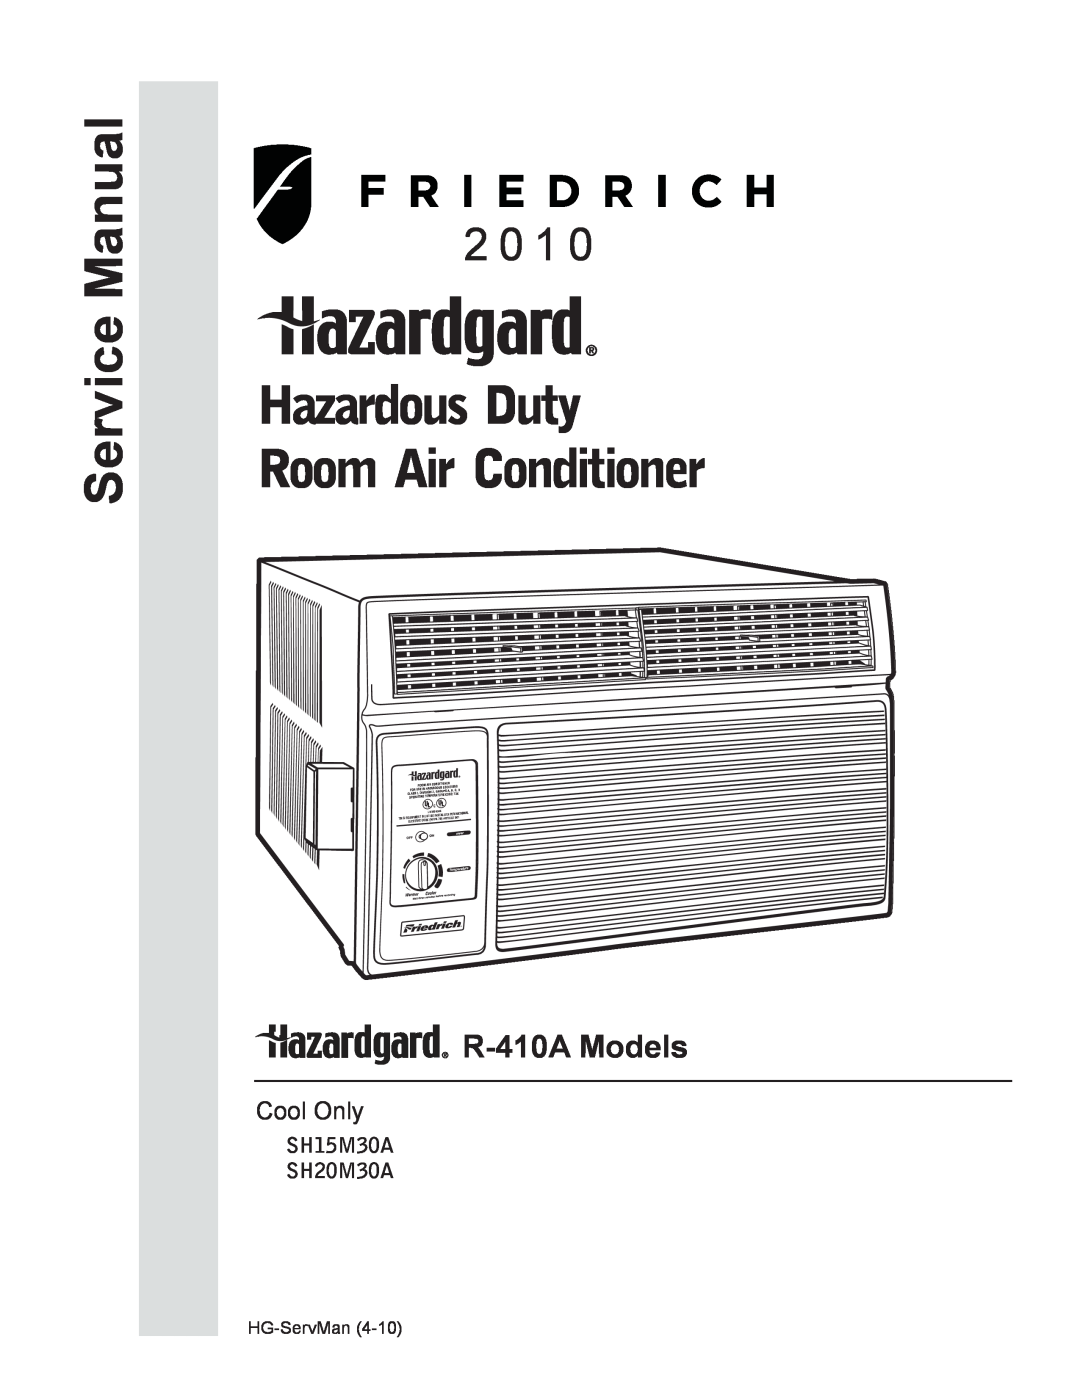 Friedrich service manual R-410AModels, Room Air Conditioners, Volt XQ05M10A, XQ06M10A, XQ08M10A, XQ10M10A, Only, Set Hr 